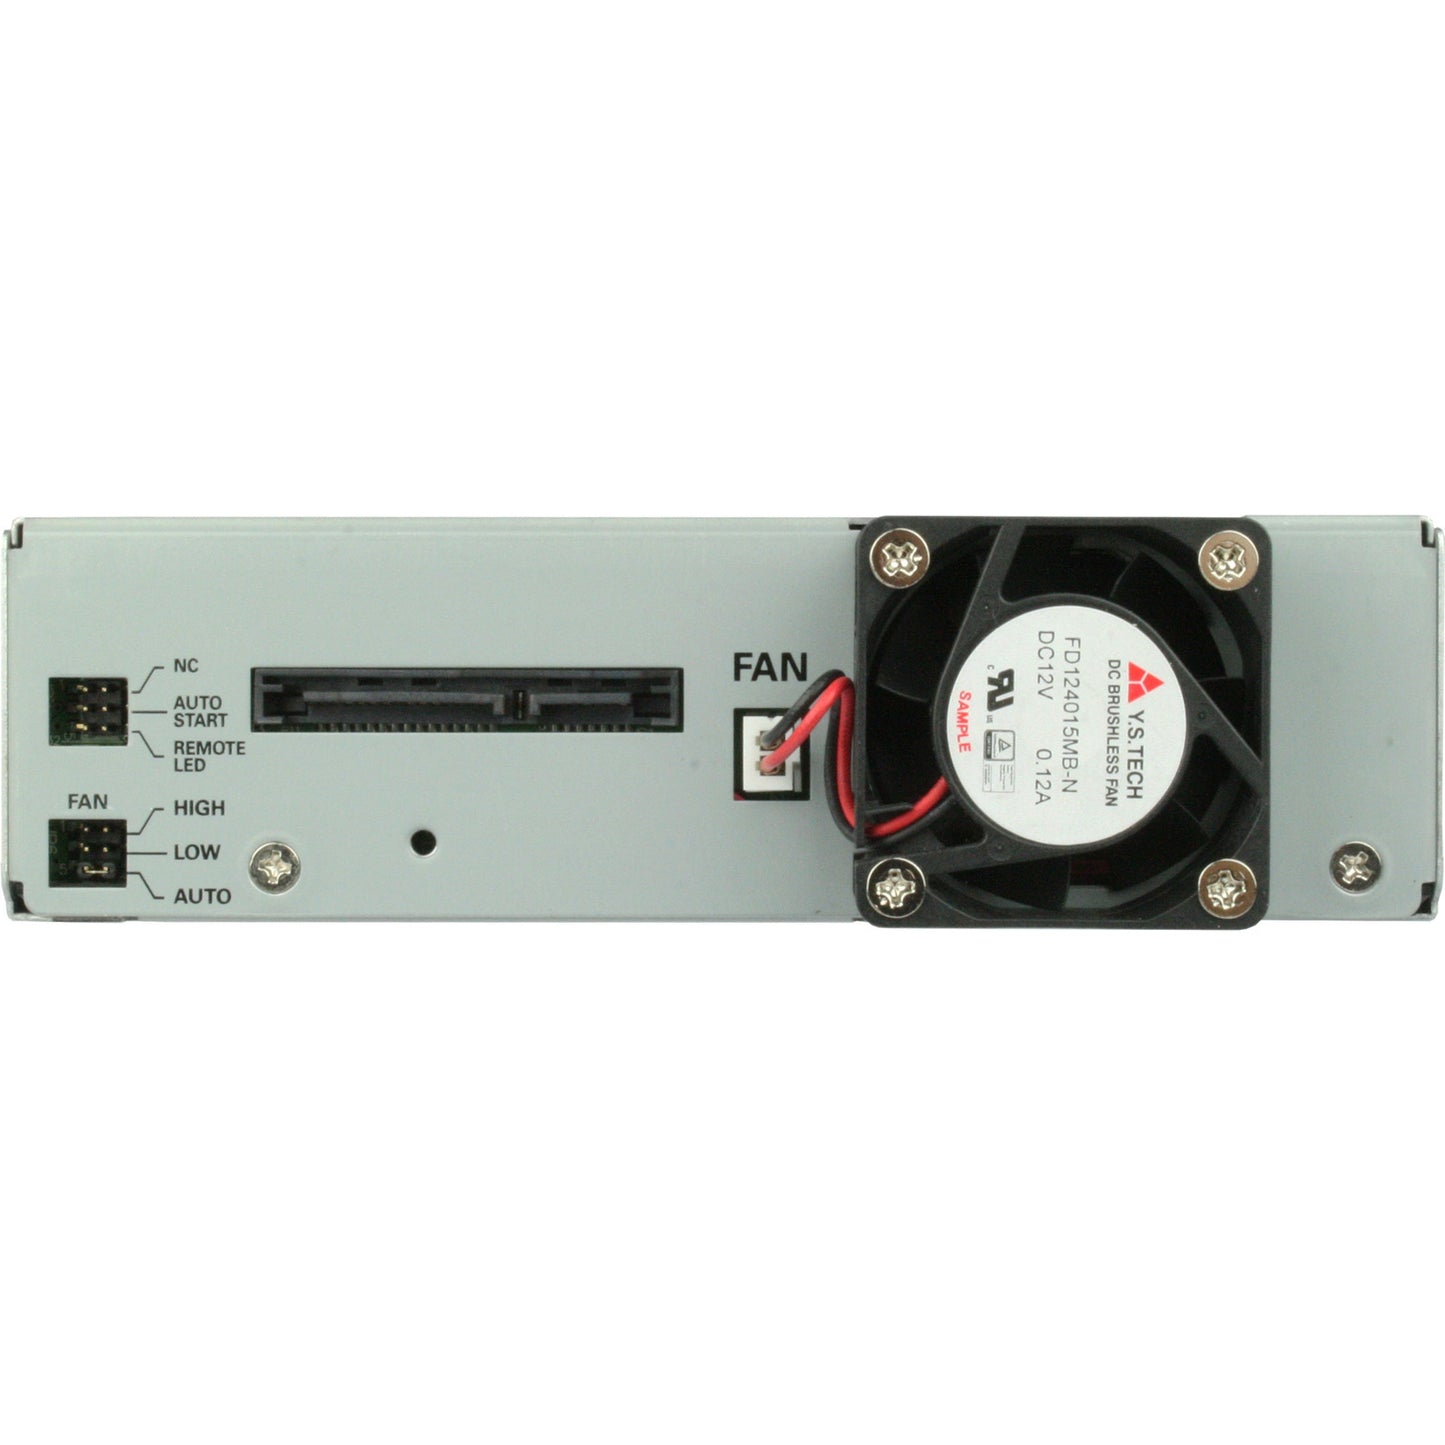 CRU Data Express DX175 Drive Bay Adapter for 5.25" - 6Gb/s SAS Serial ATA/600 Host Interface - Black